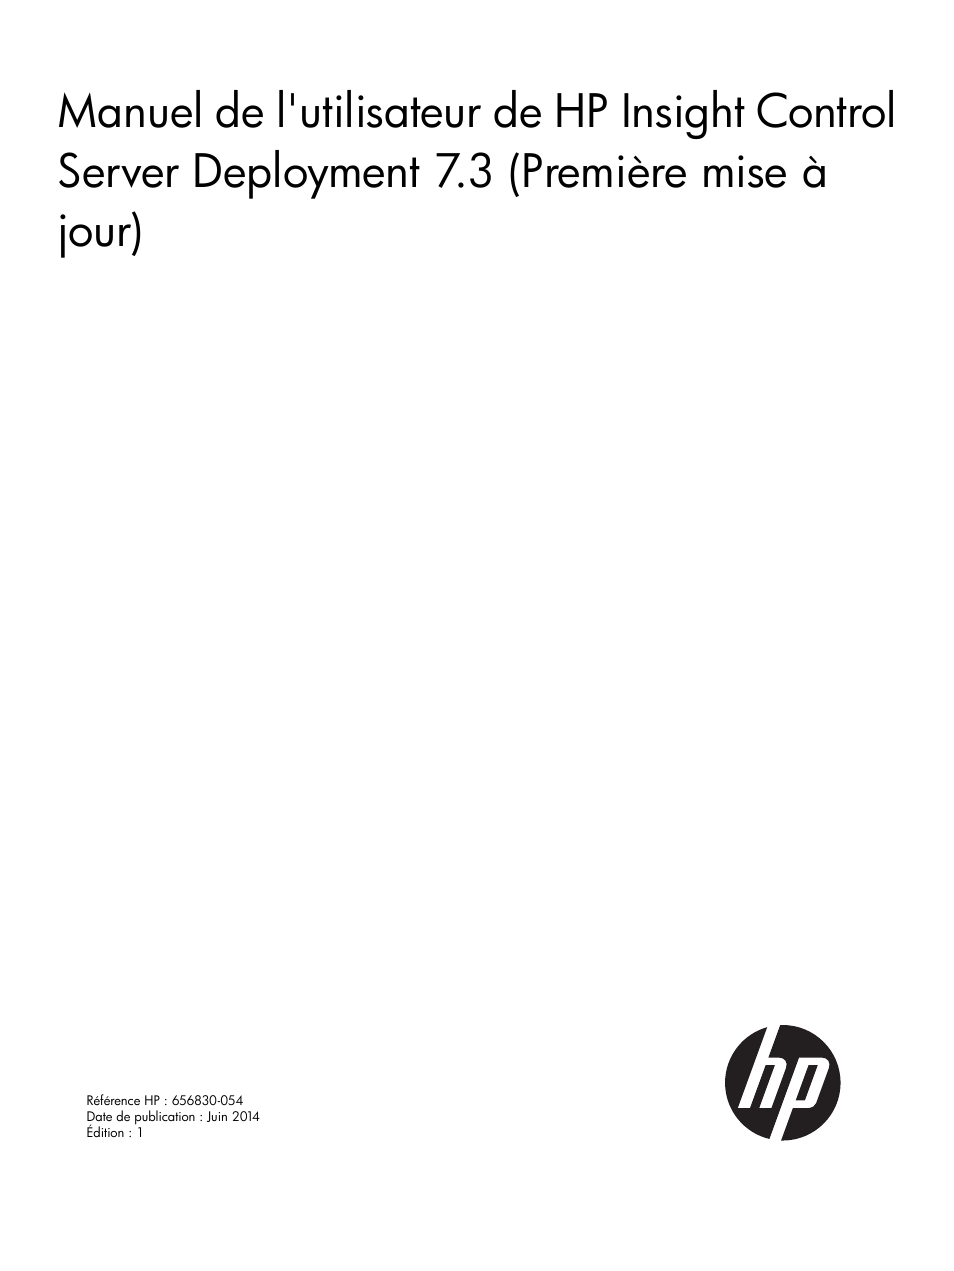 HP Insight Control Manuel d'utilisation | Pages: 25